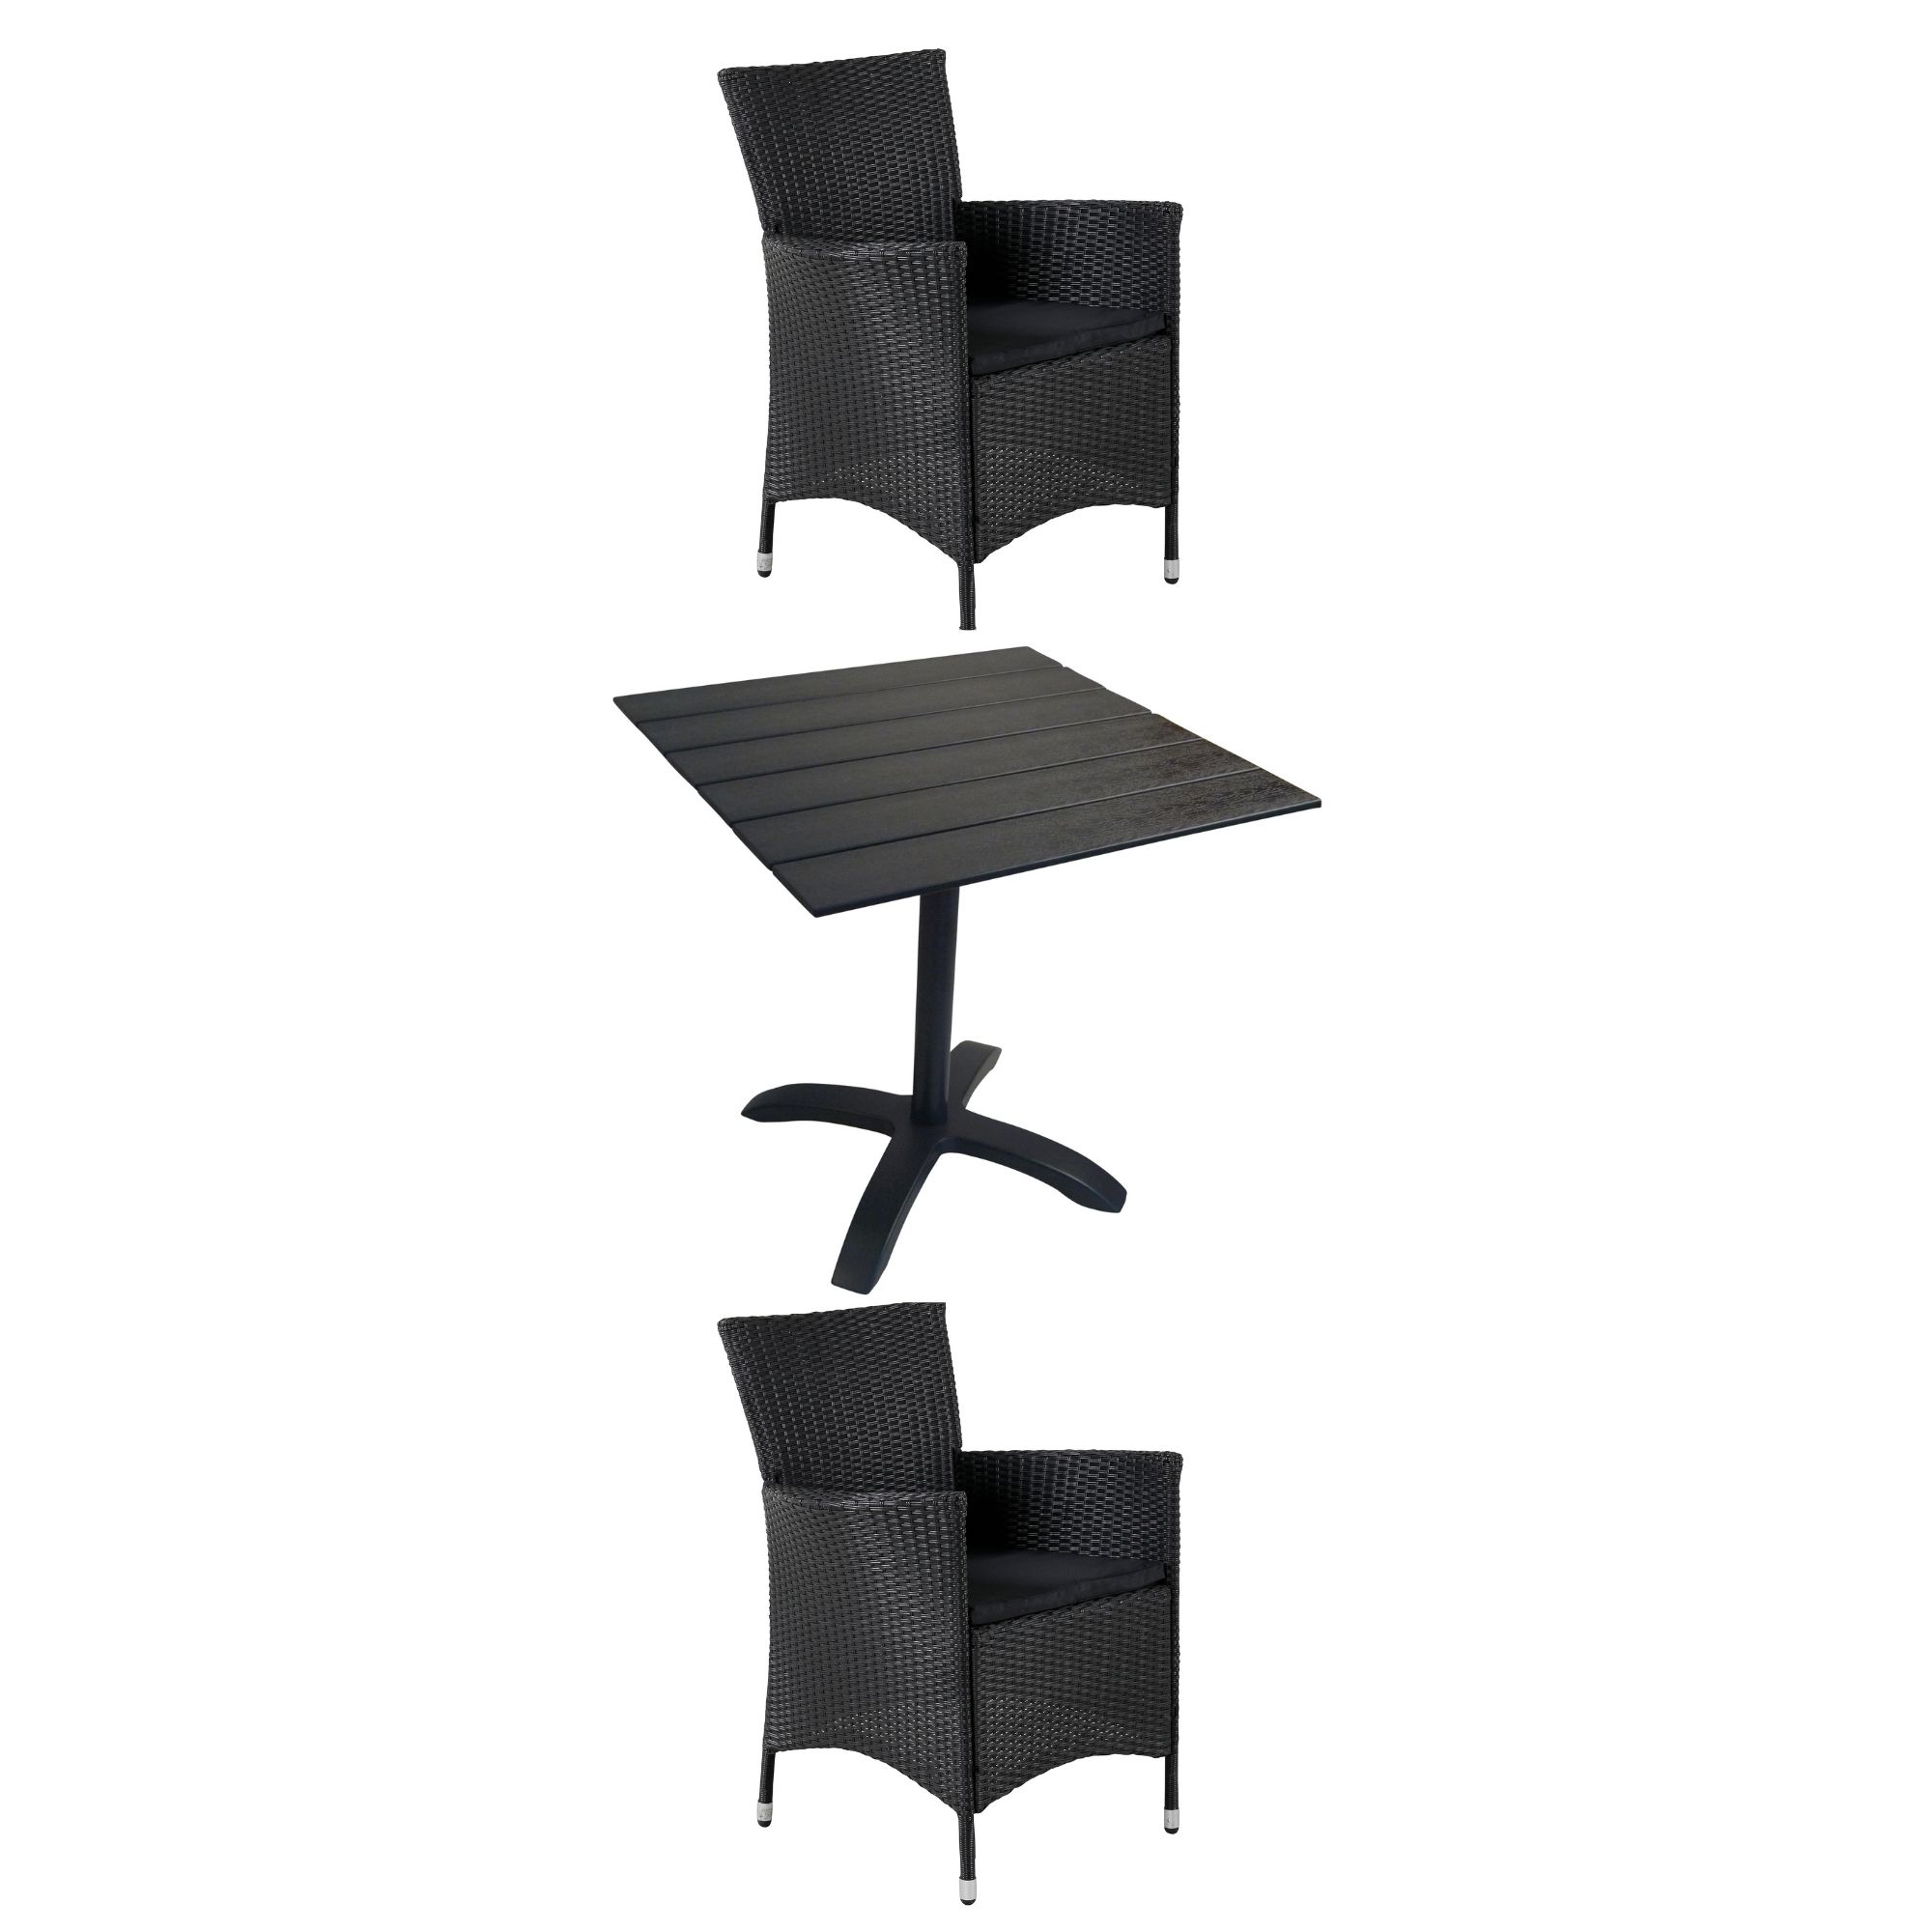 Venture Design - Colorado Cafe Table 70x70 cm - Alu/Aintwood with 2 pcs. Knick Garden Chairs - Rattan - Bundle